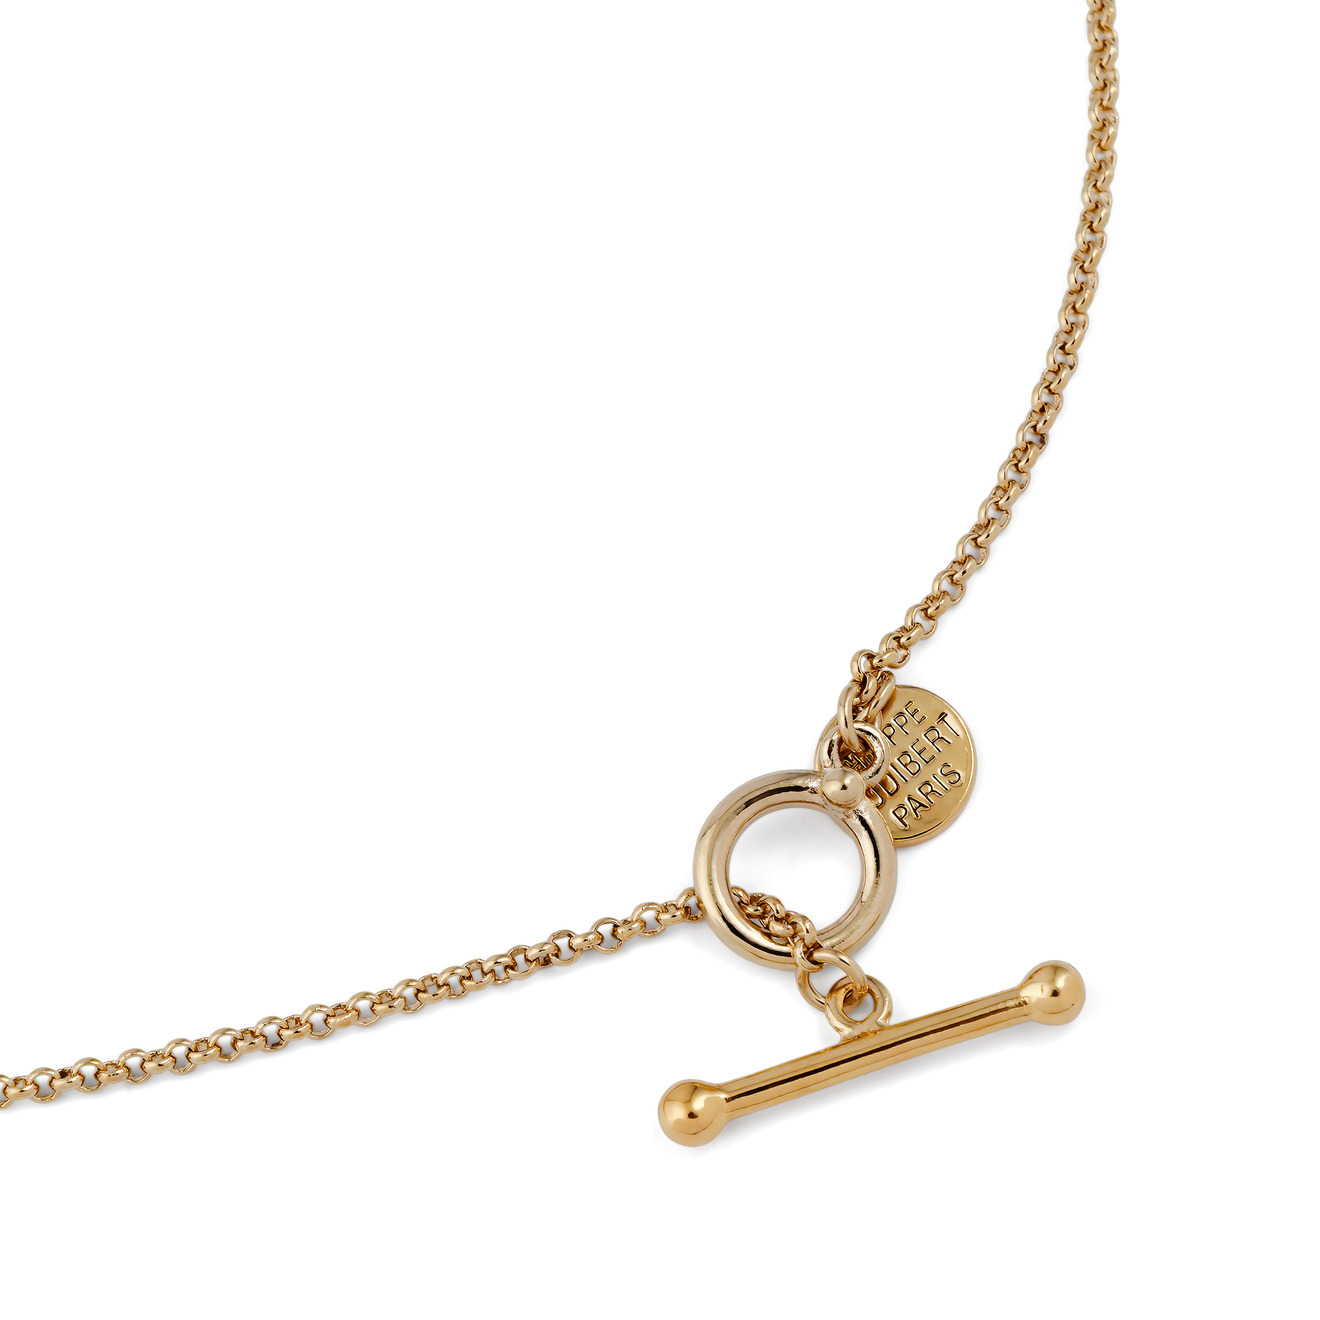 Philippe Audibert Позолоченное колье Tal necklace philippe audibert позолоченное кольцо tal